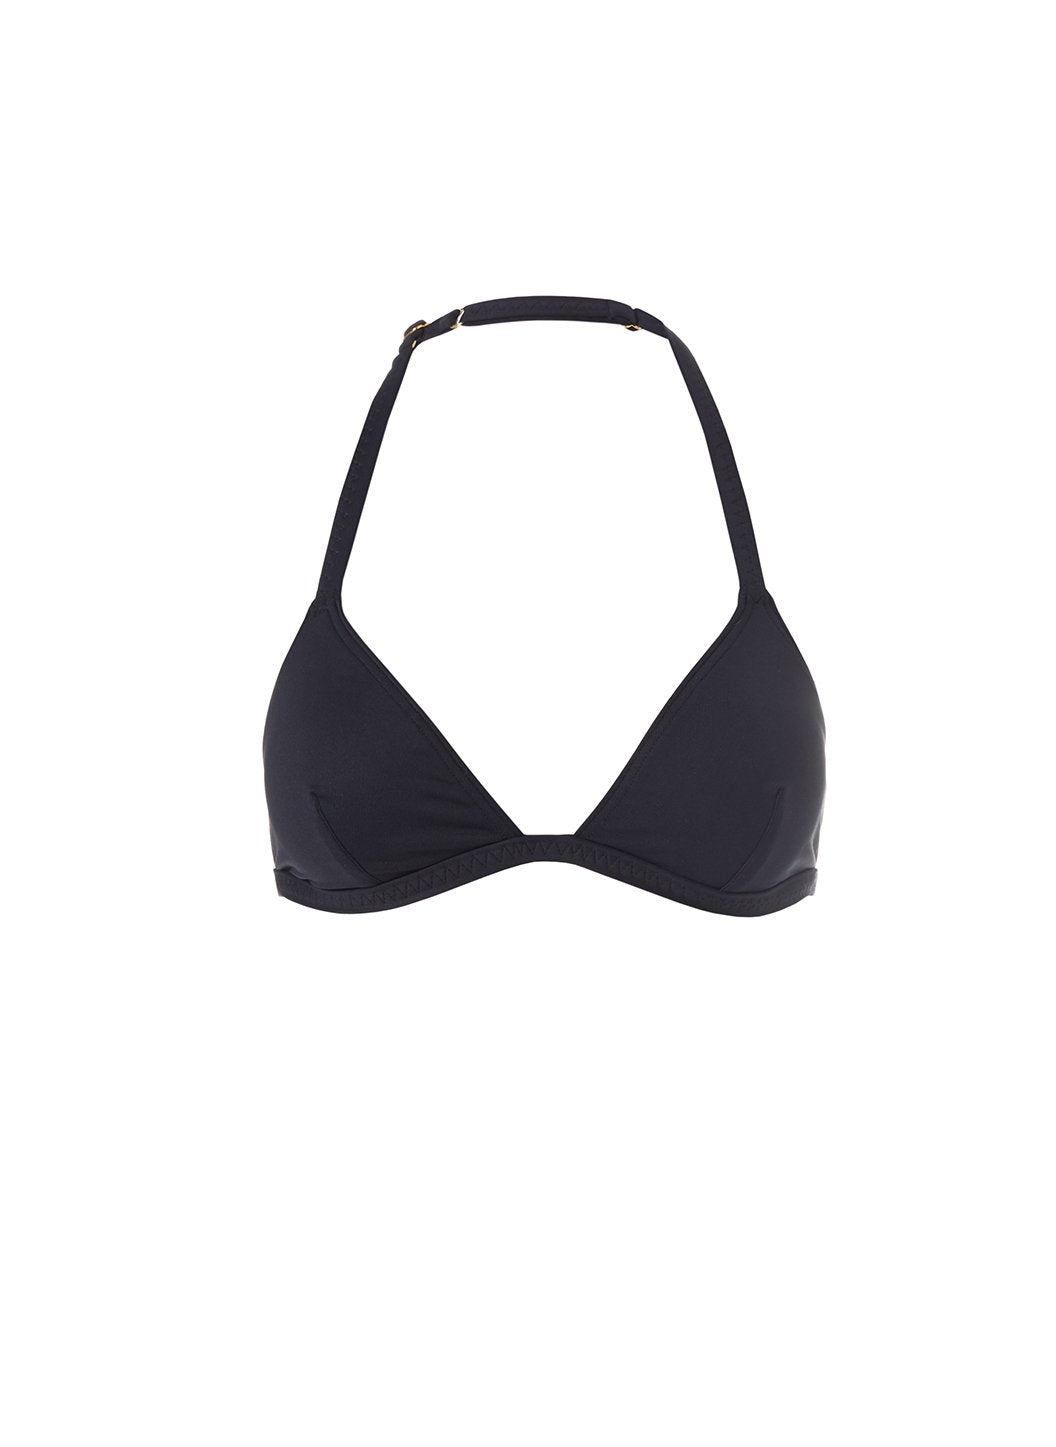 Portofino Black Bikini Top